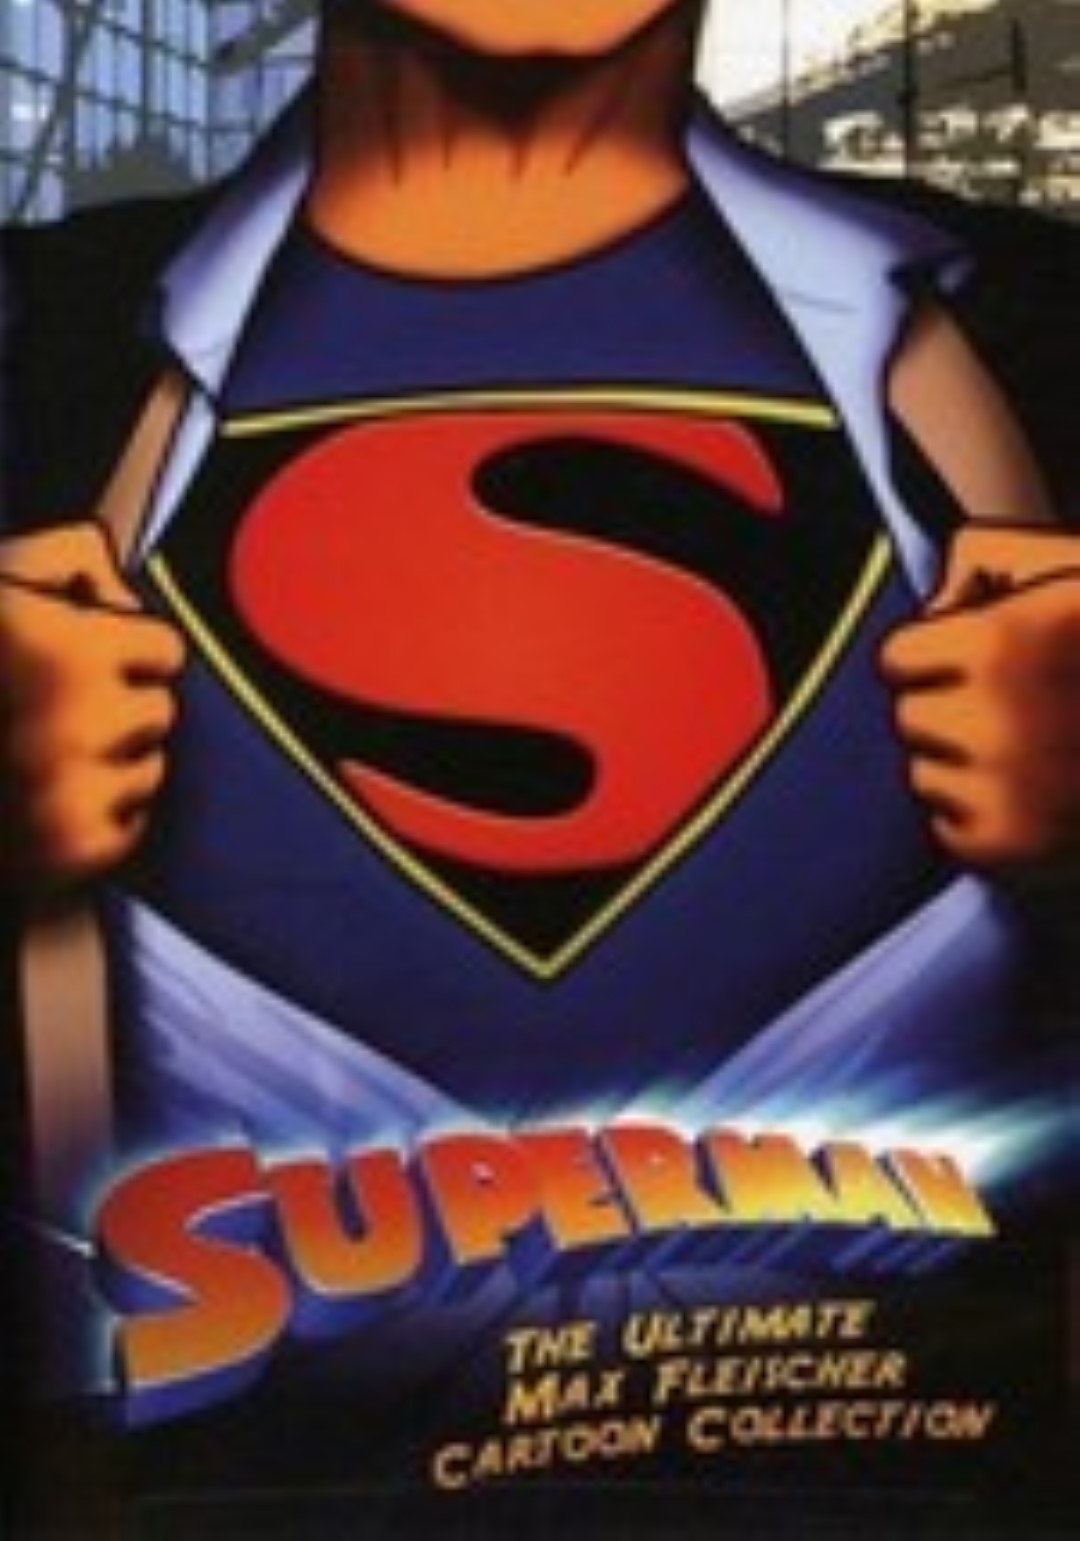 Superman: The Ultimate Max Fleischer Cartoon Collection Dvd - $10.99